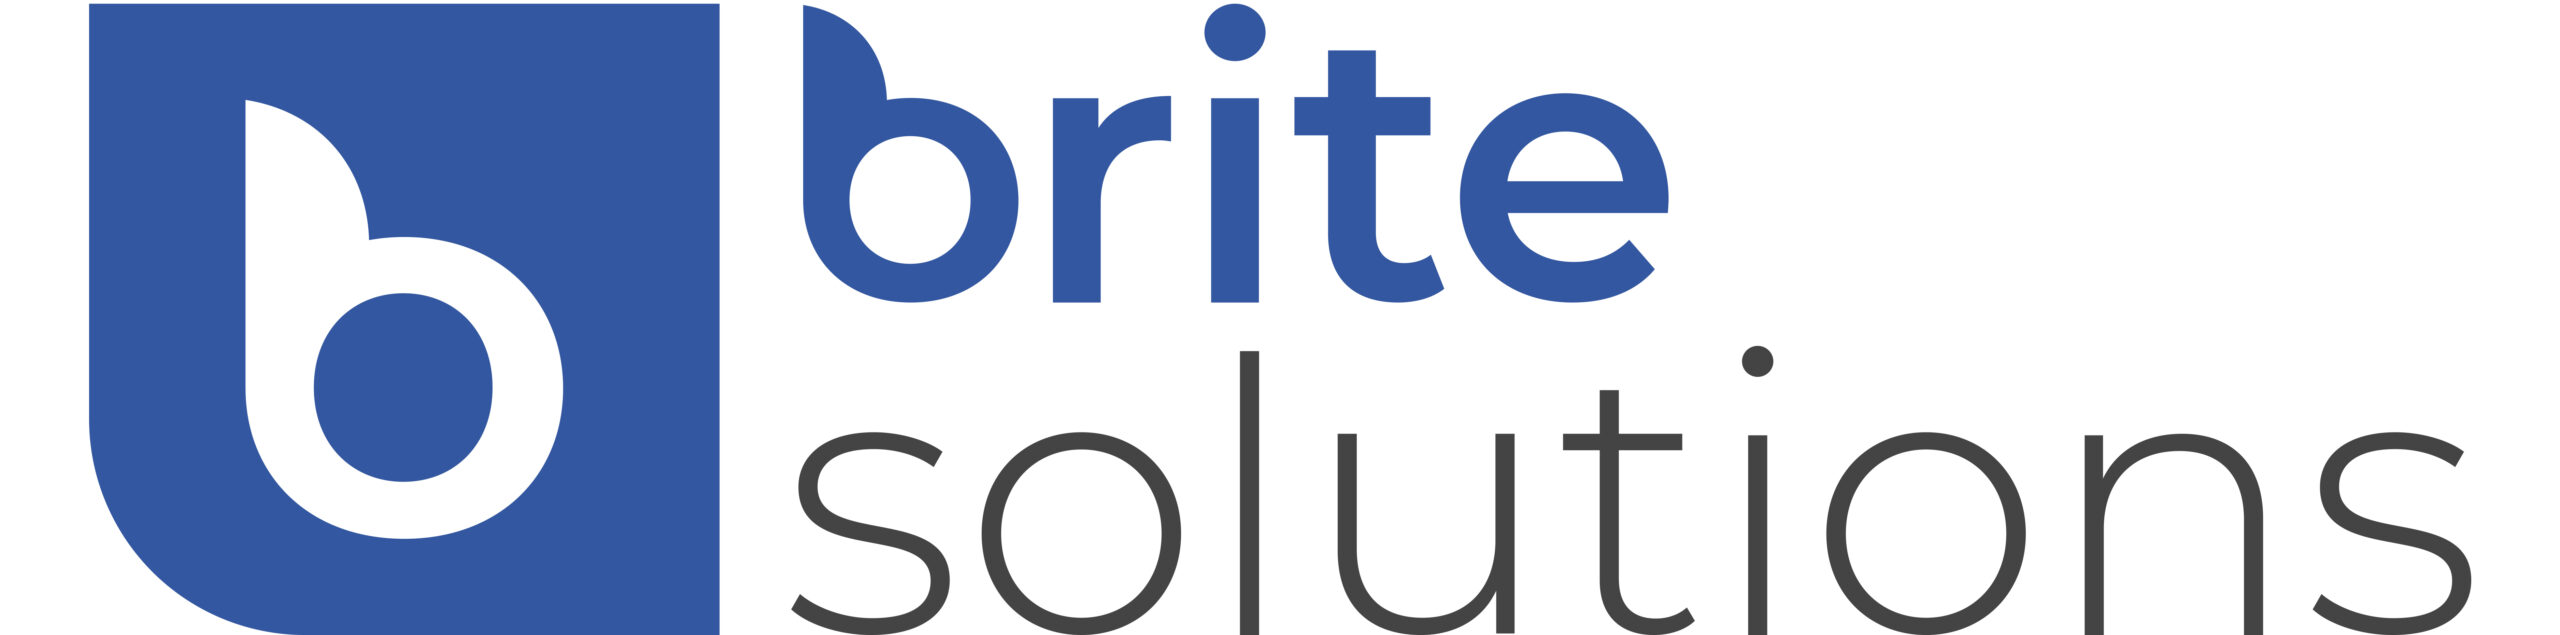 Brite Solutions Logo